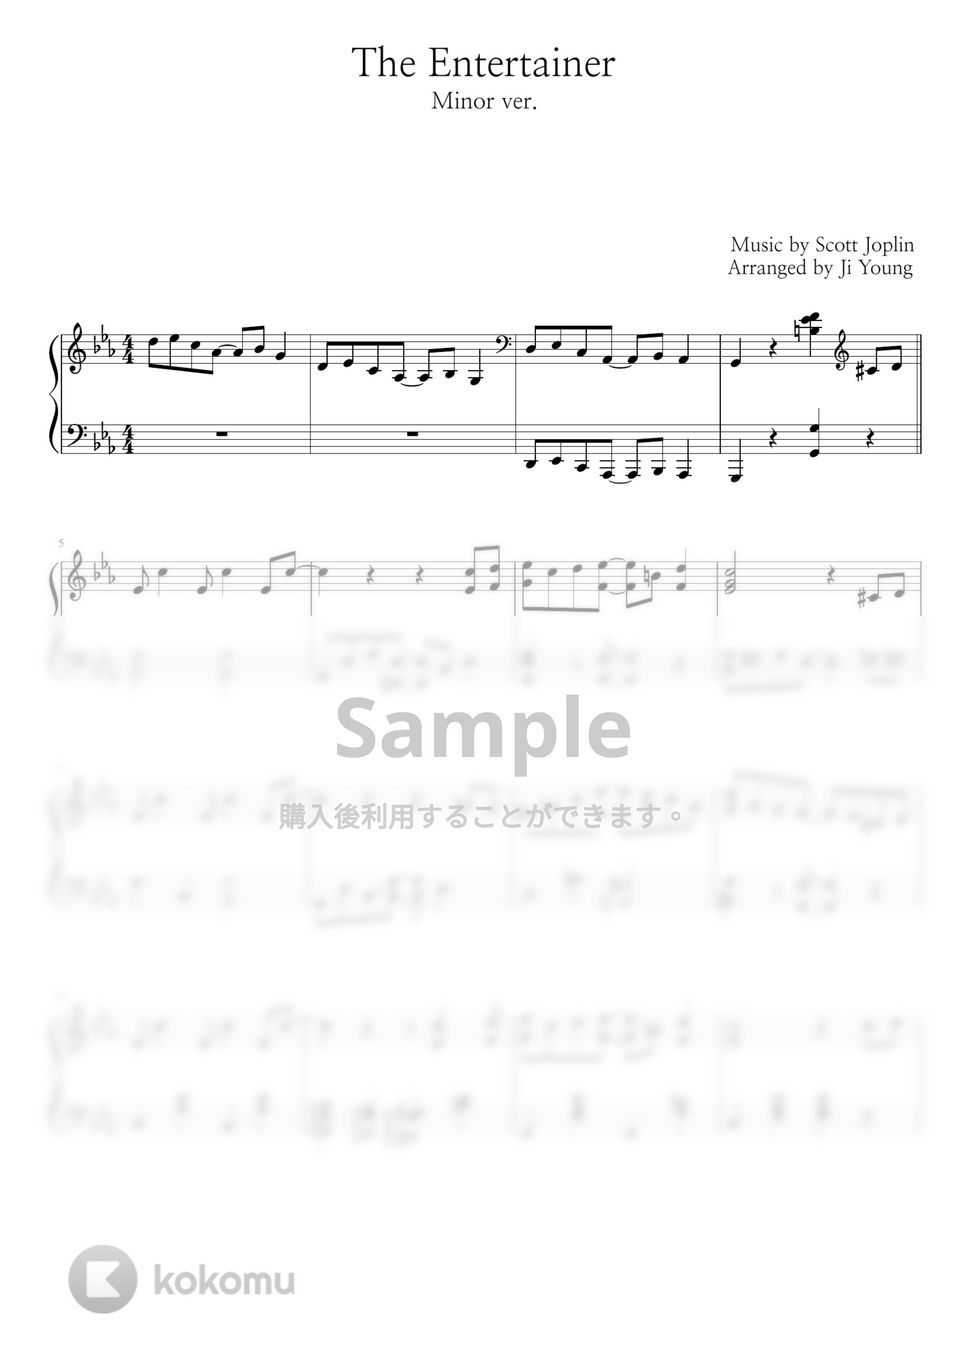 Scott Joplin - (minor) Entertainer by POLYPiano